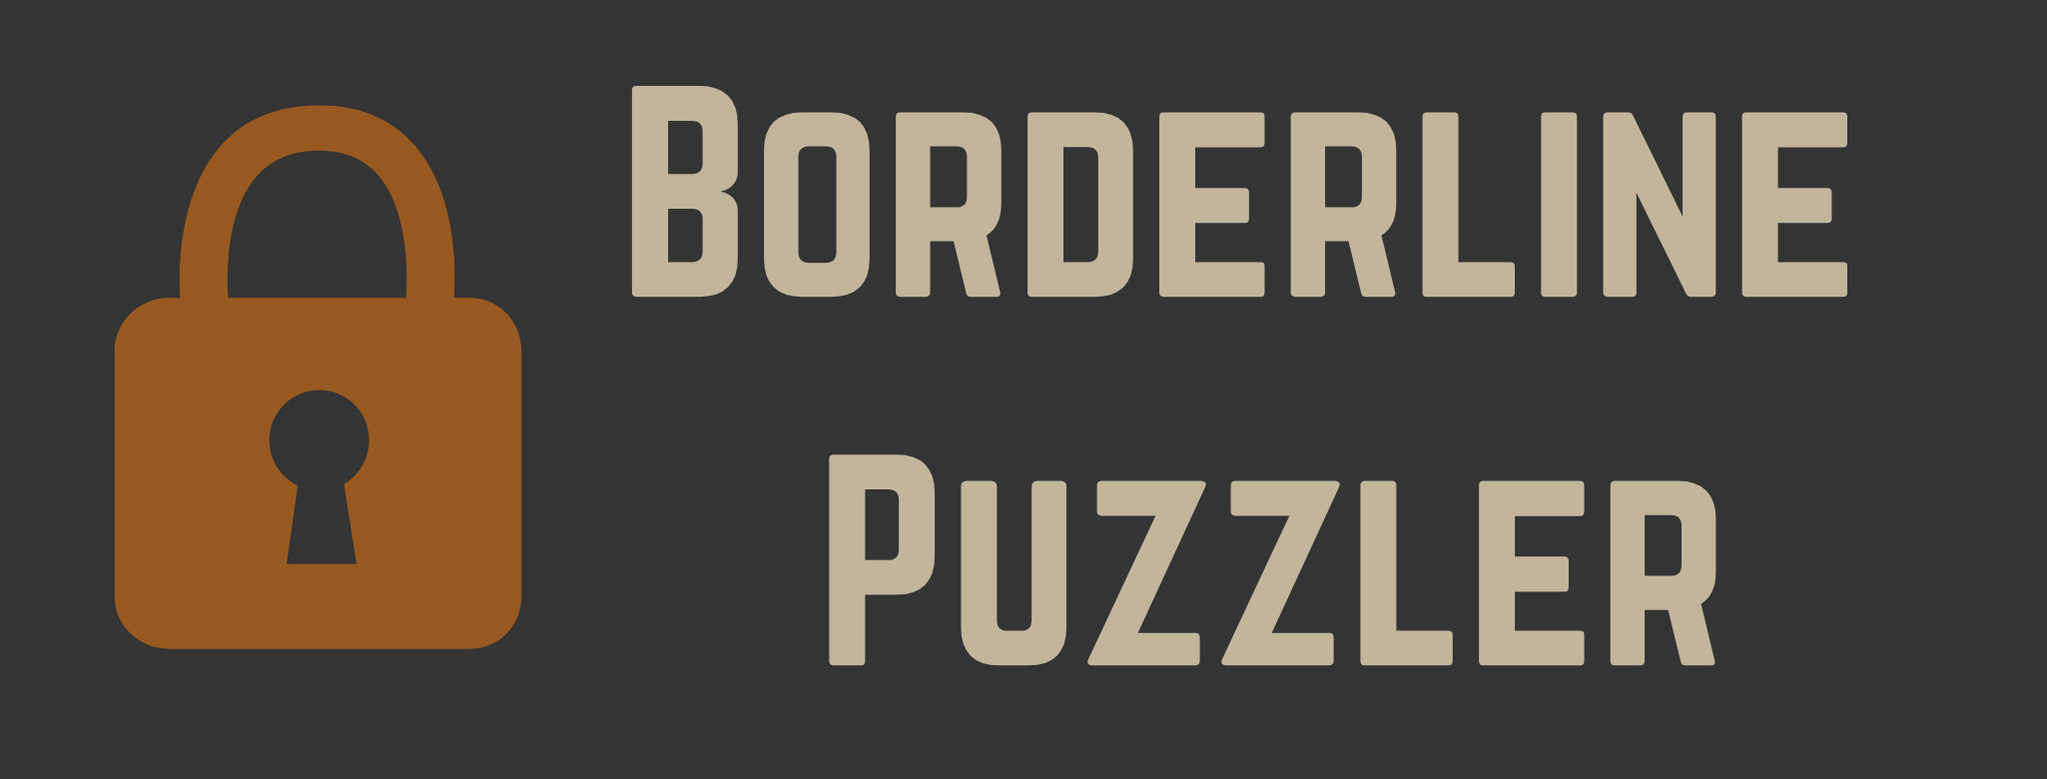 Borderline Puzzler